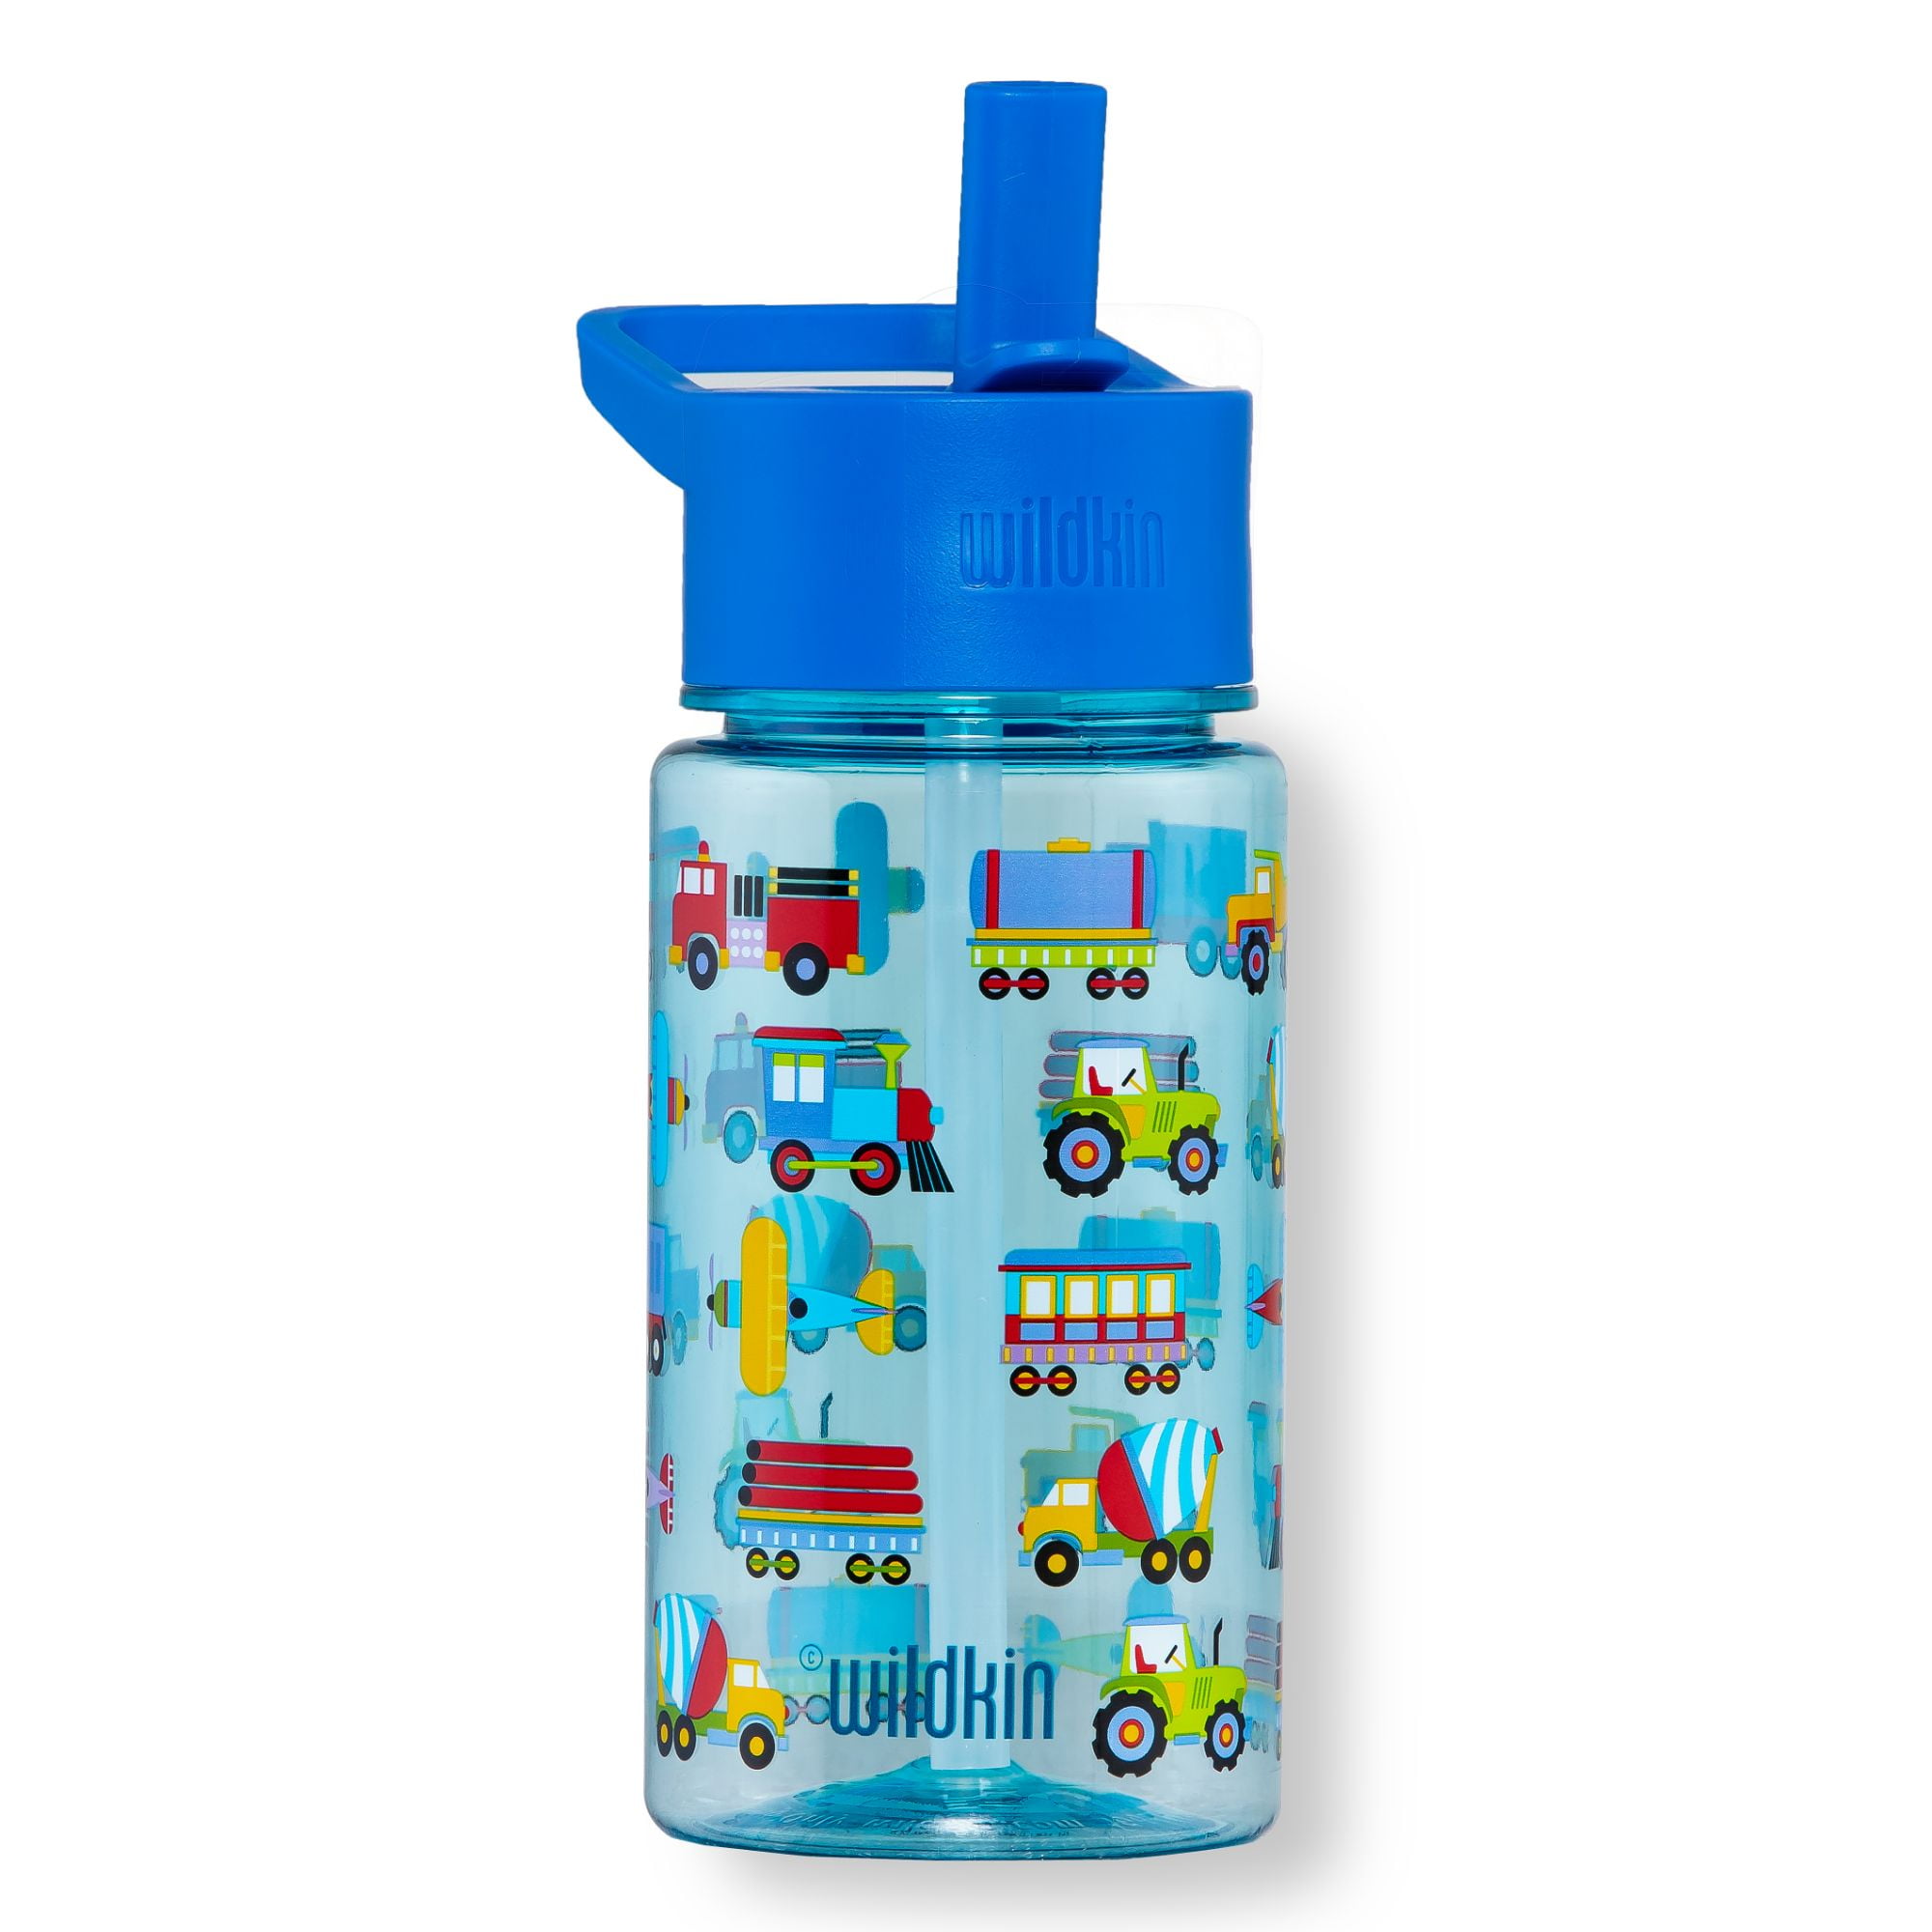 16 Oz Cute Water Bottle For School Kids Girls And Boys,bpa Free